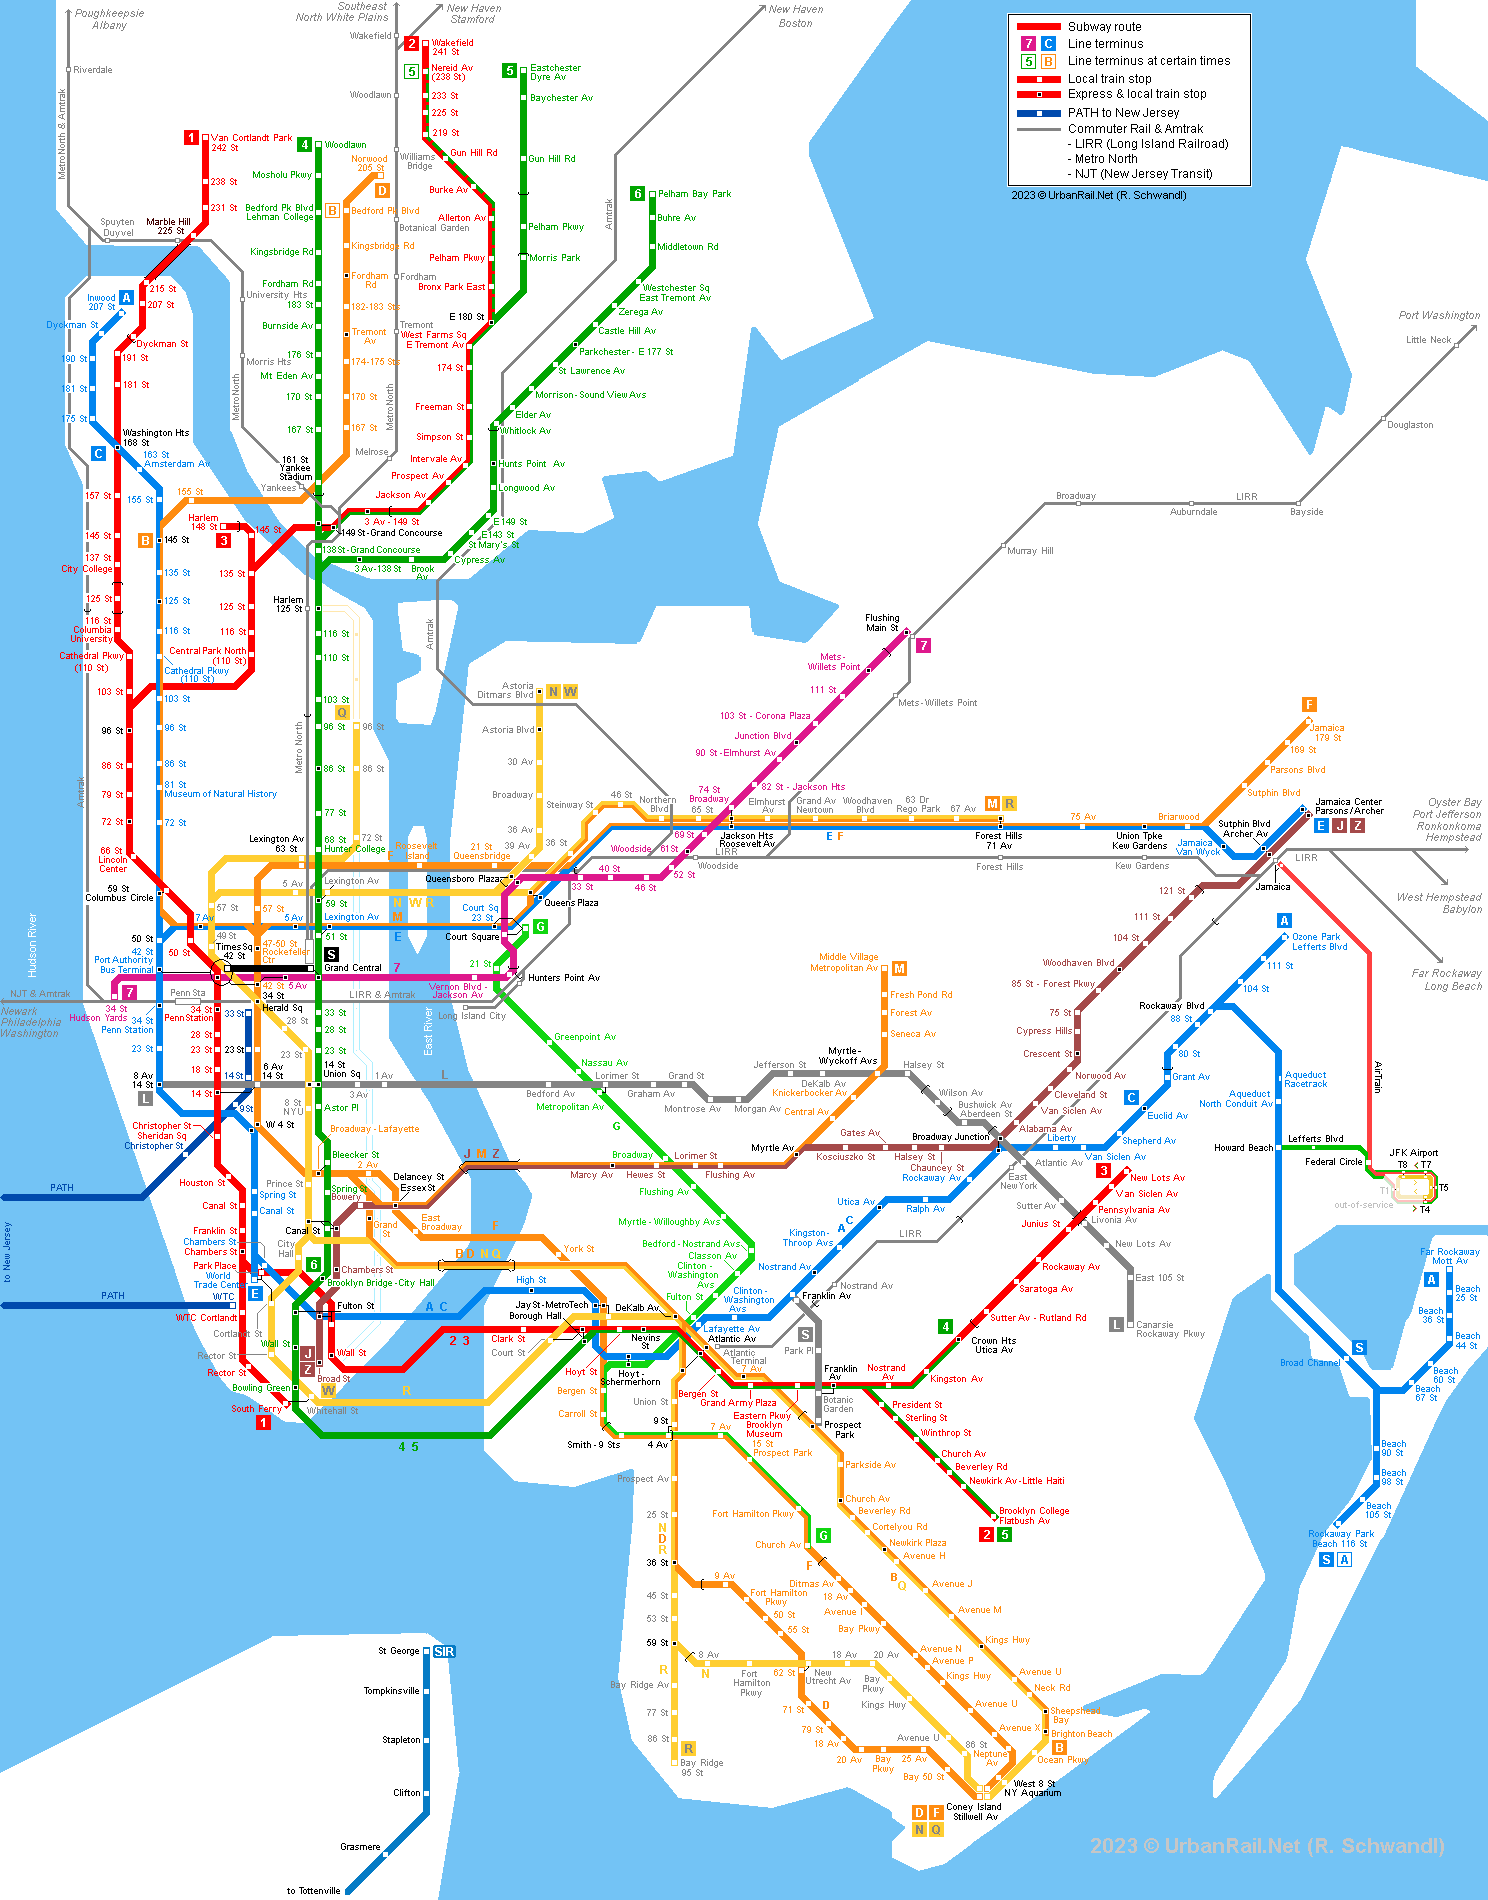 urbanrail-net-new-york-city-subway-map